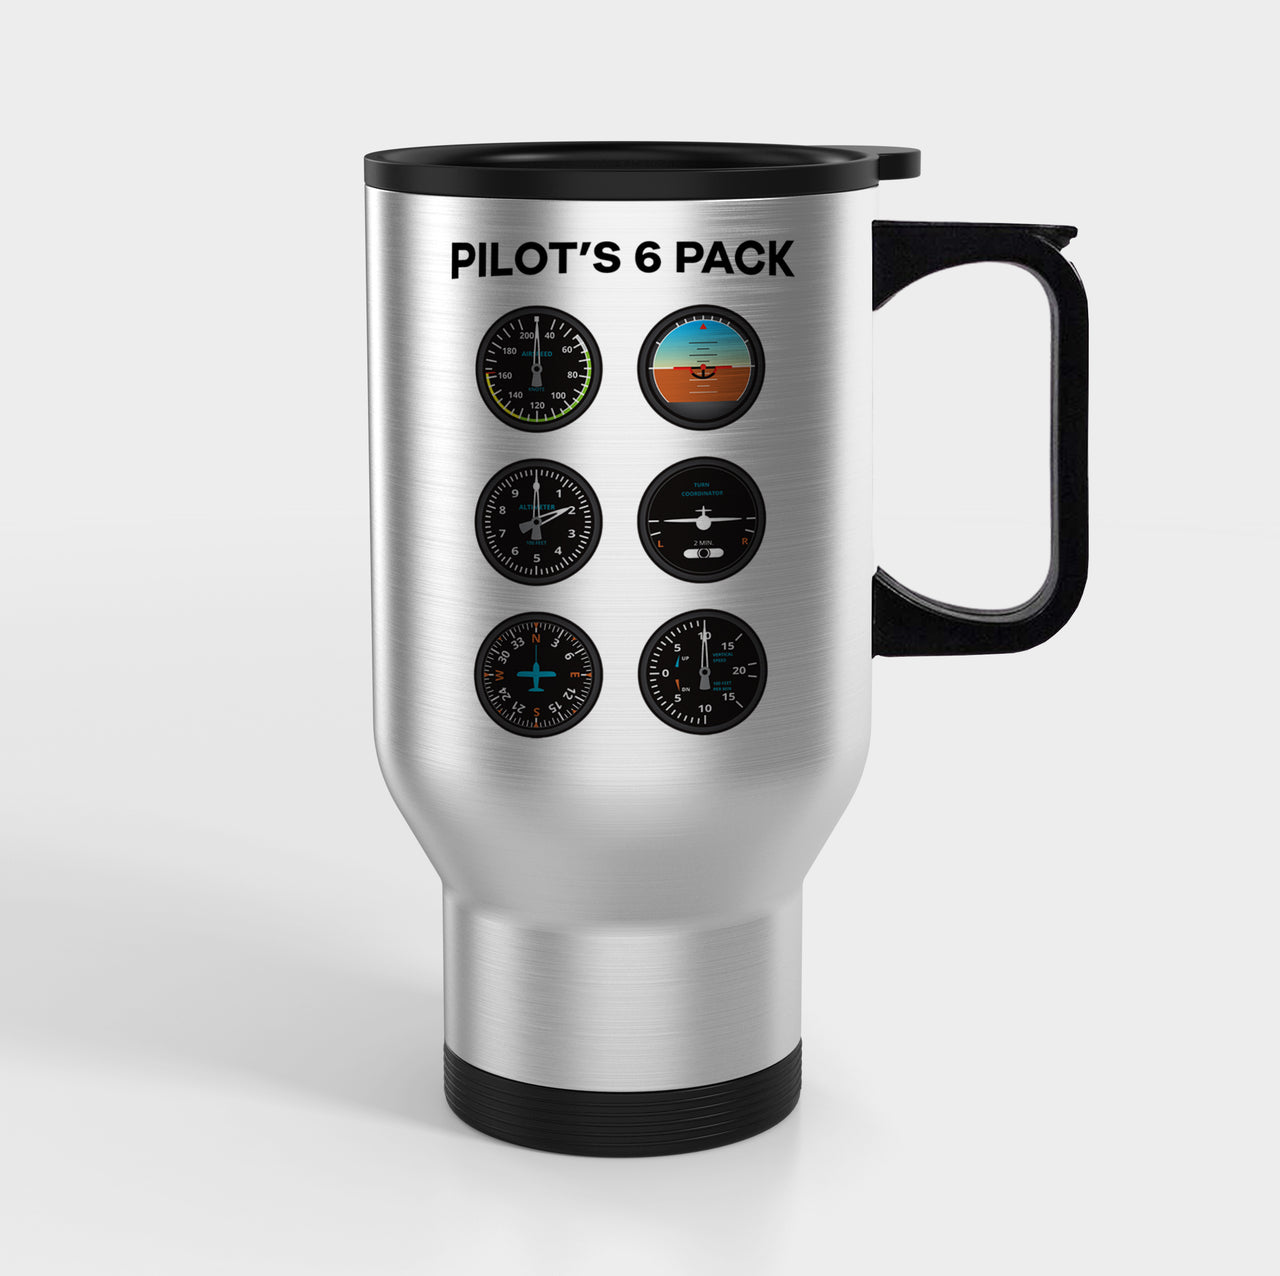 Pilot's 6 Pack Designed Travel Mugs (With Holder)